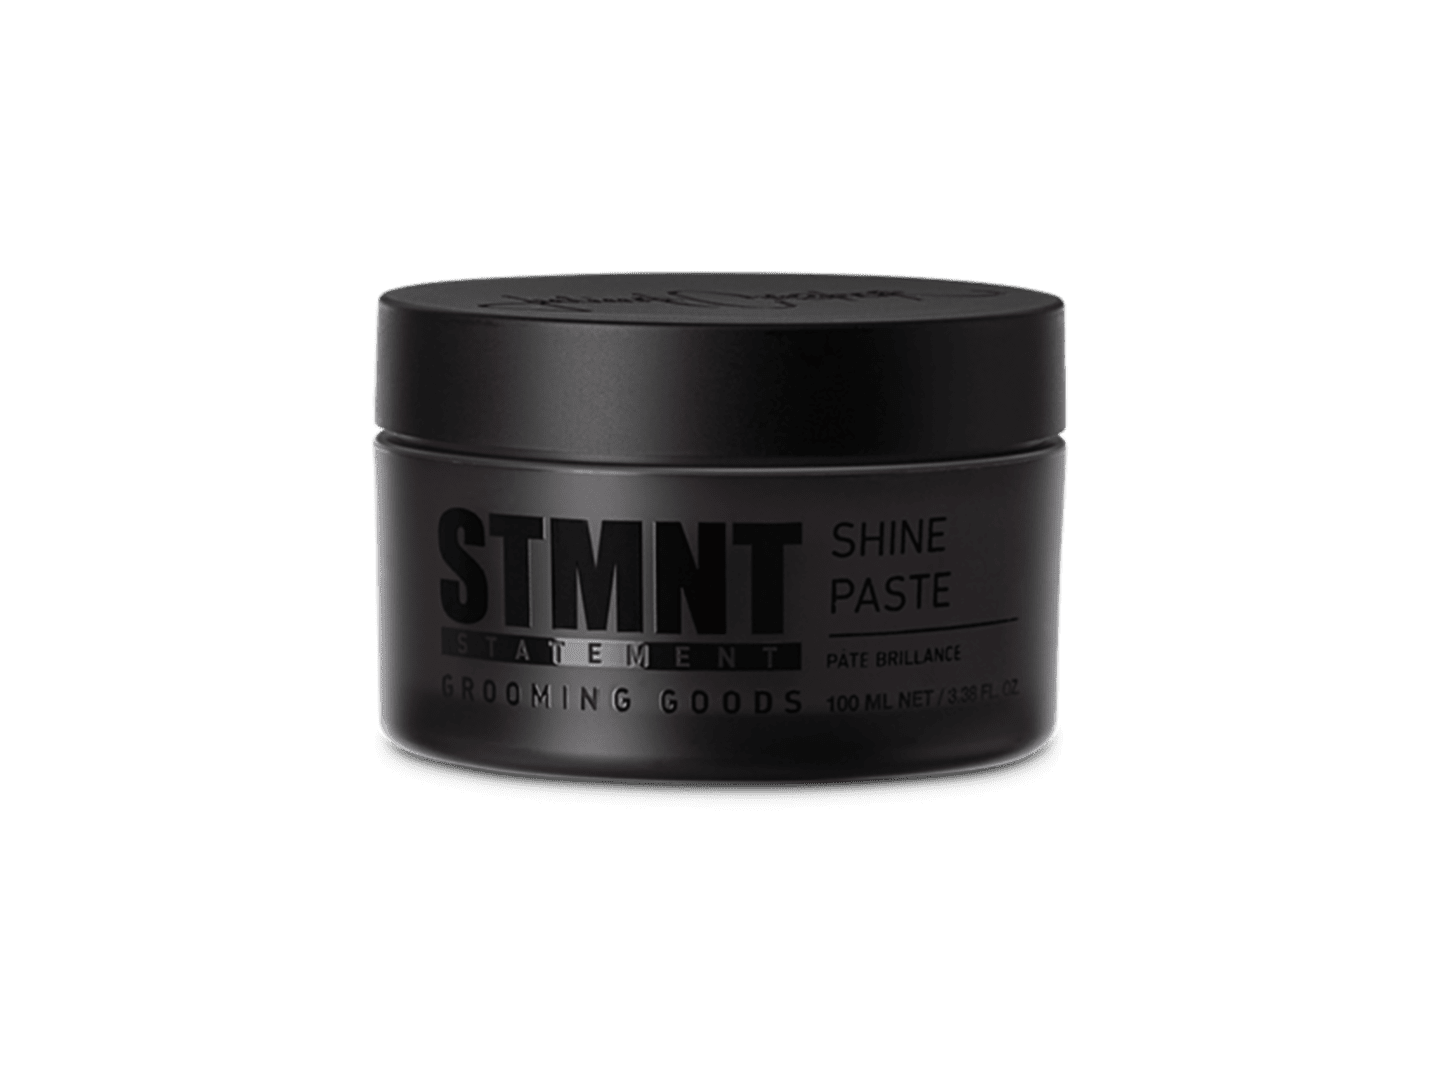 STMNT Shine Paste, 3.38 oz.